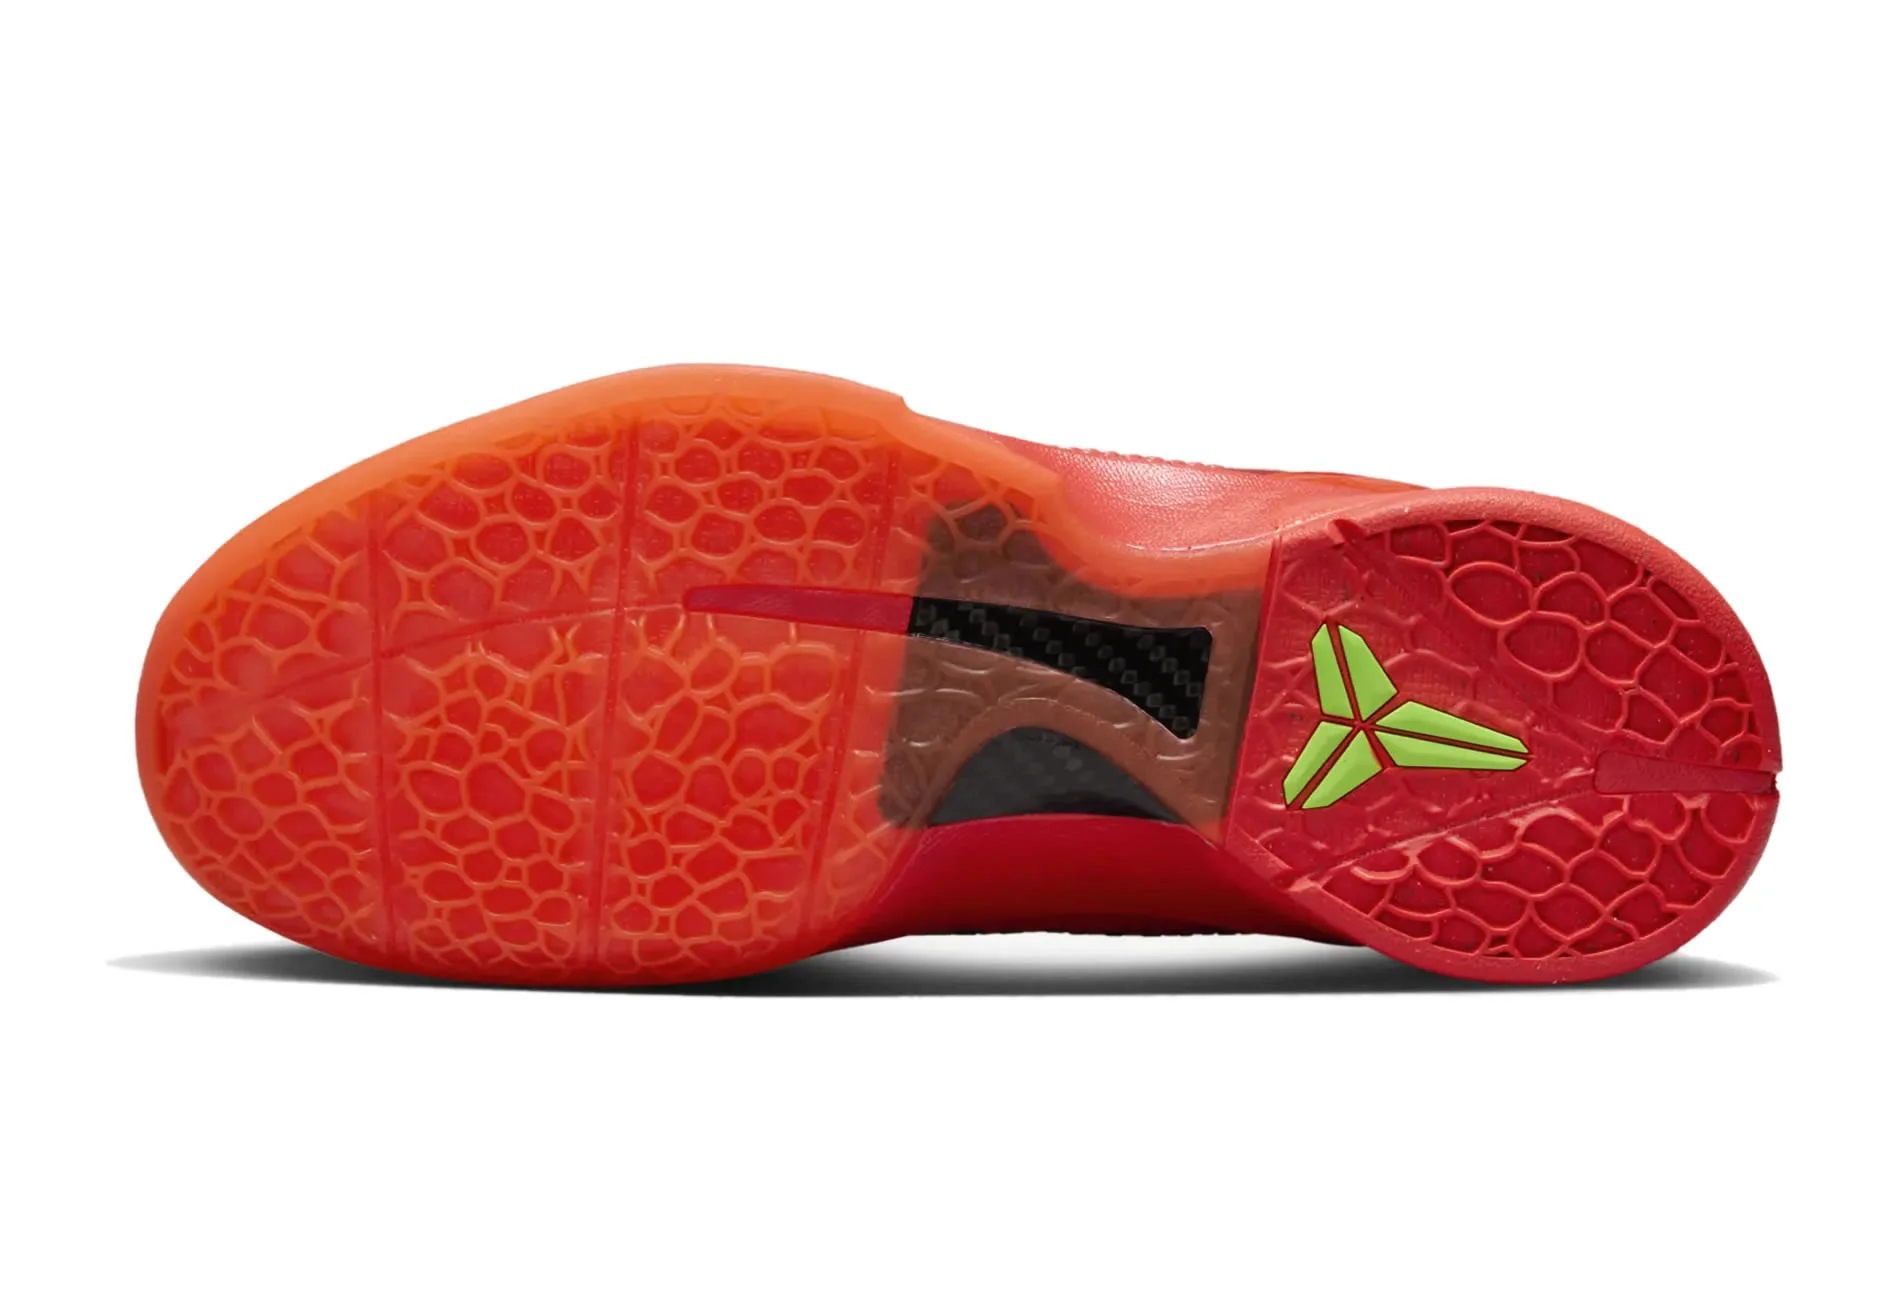 Nike Kobe 6 Protro Reverse Grinch Fv4921 600 Retail Price For Sale (6) - www.ljrofficial.com